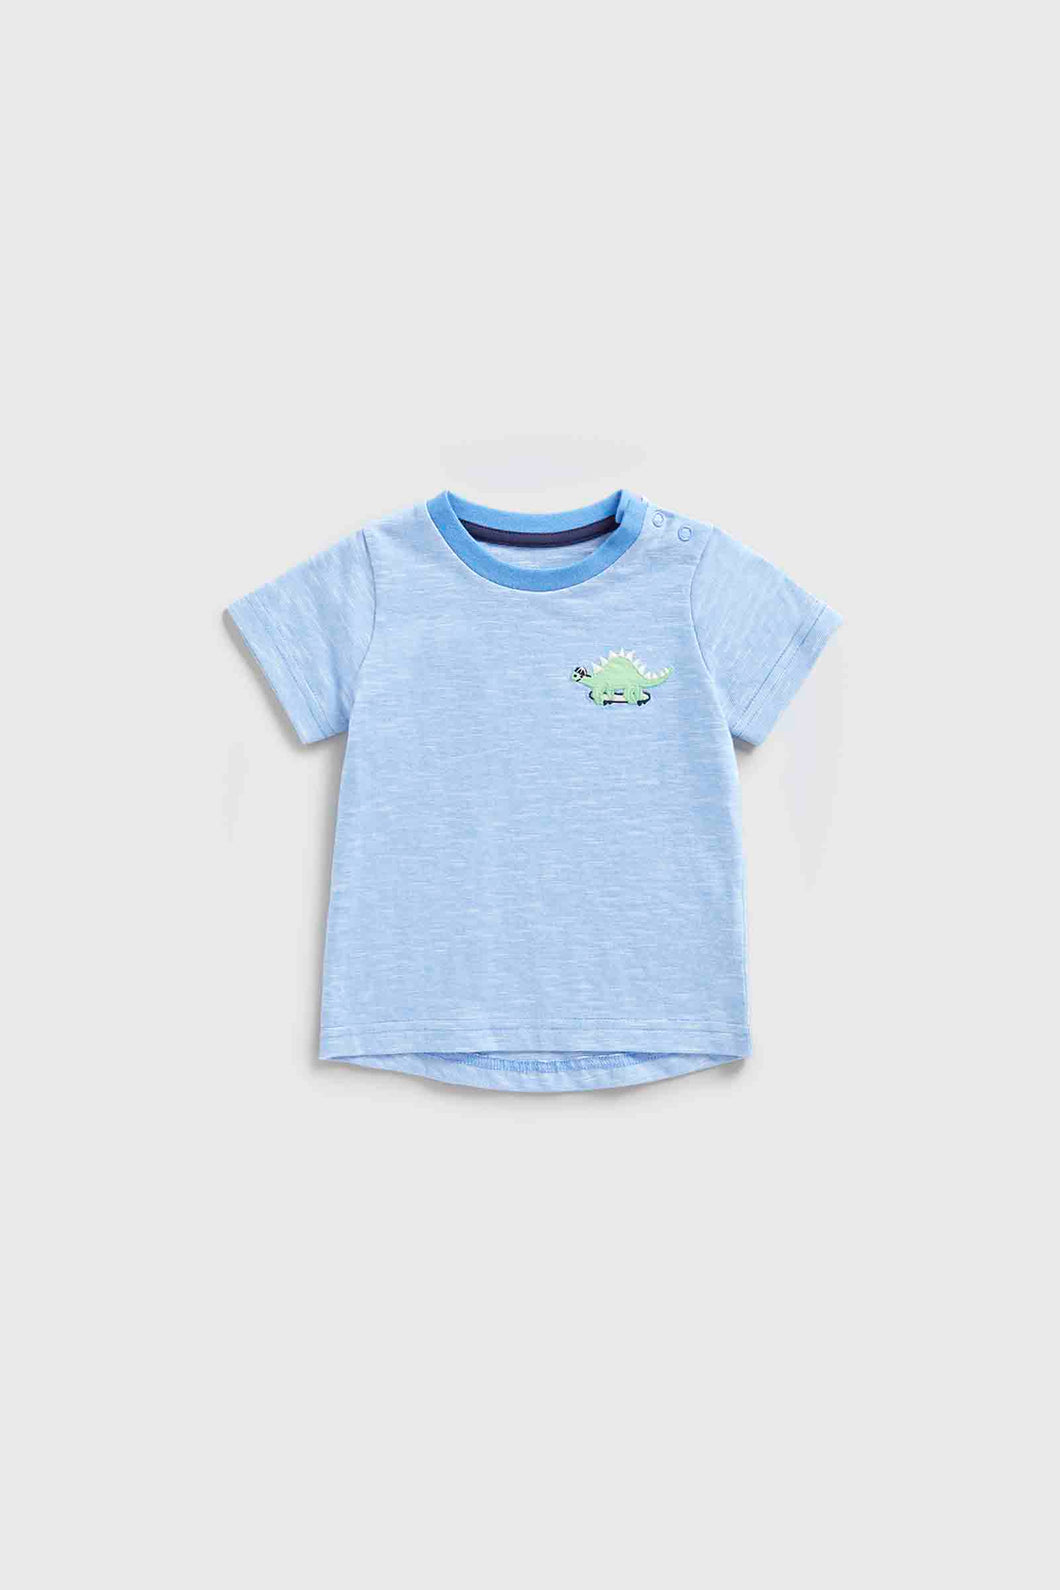 Mothercare Dinosaur Striped T-Shirt